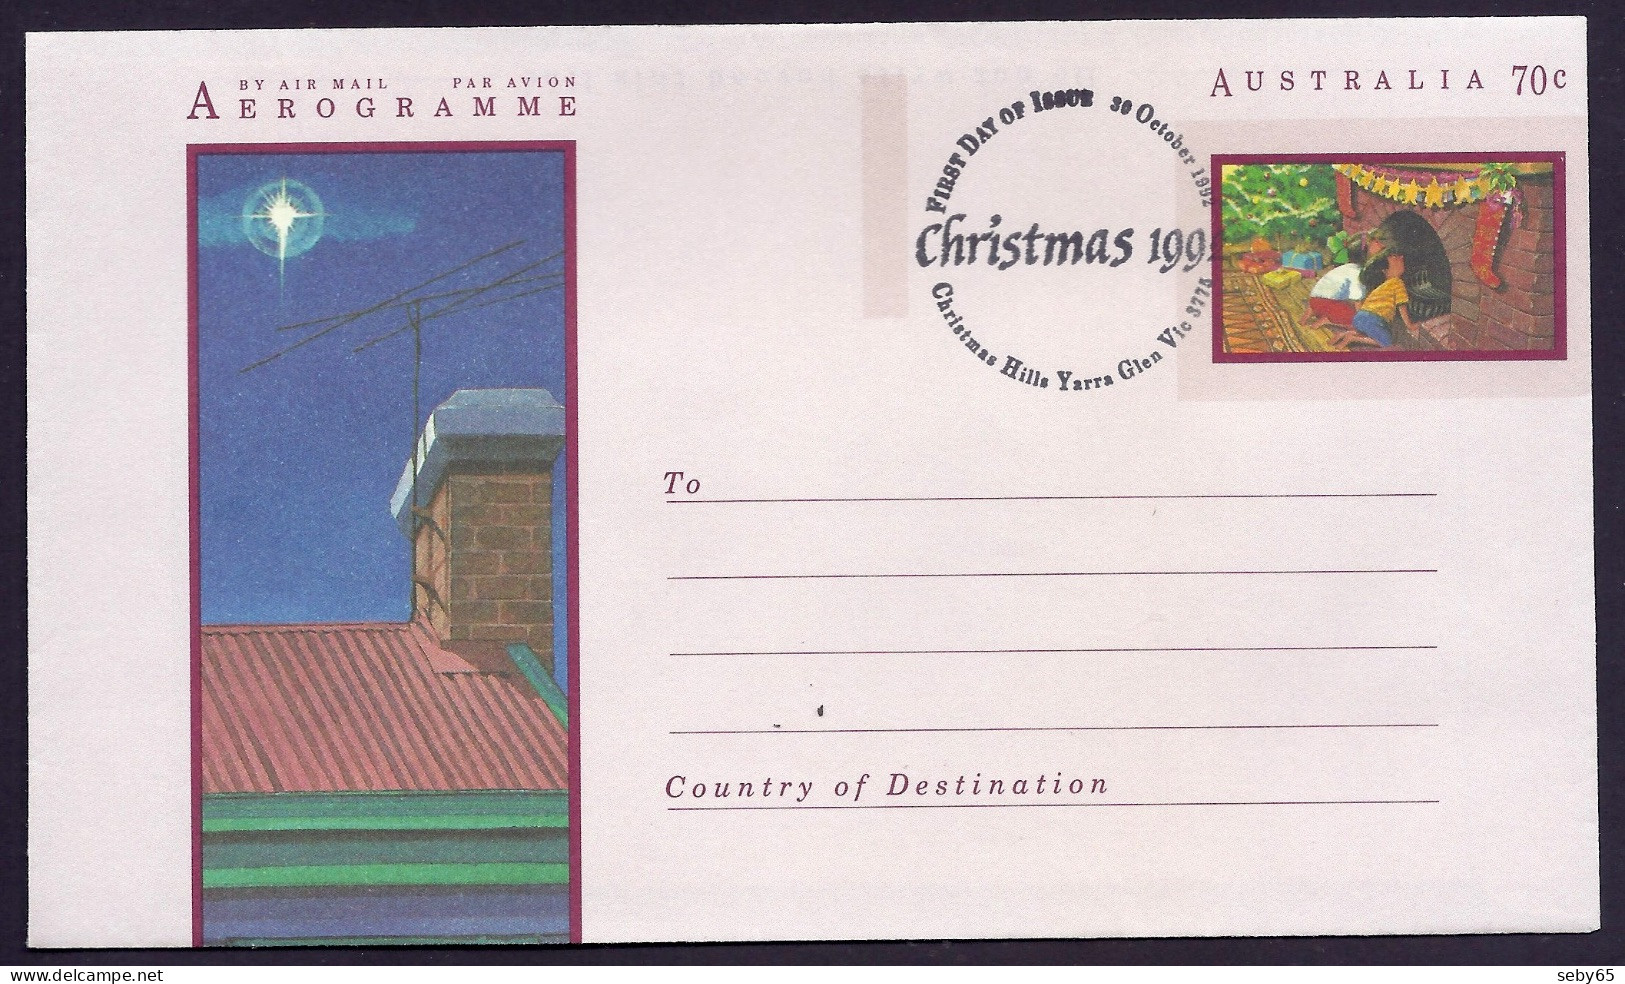 Australia 1992 Aerogramme - Christmas, Noel, Natale, Nativity, 70c - FDC Postmark - Luchtpostbladen